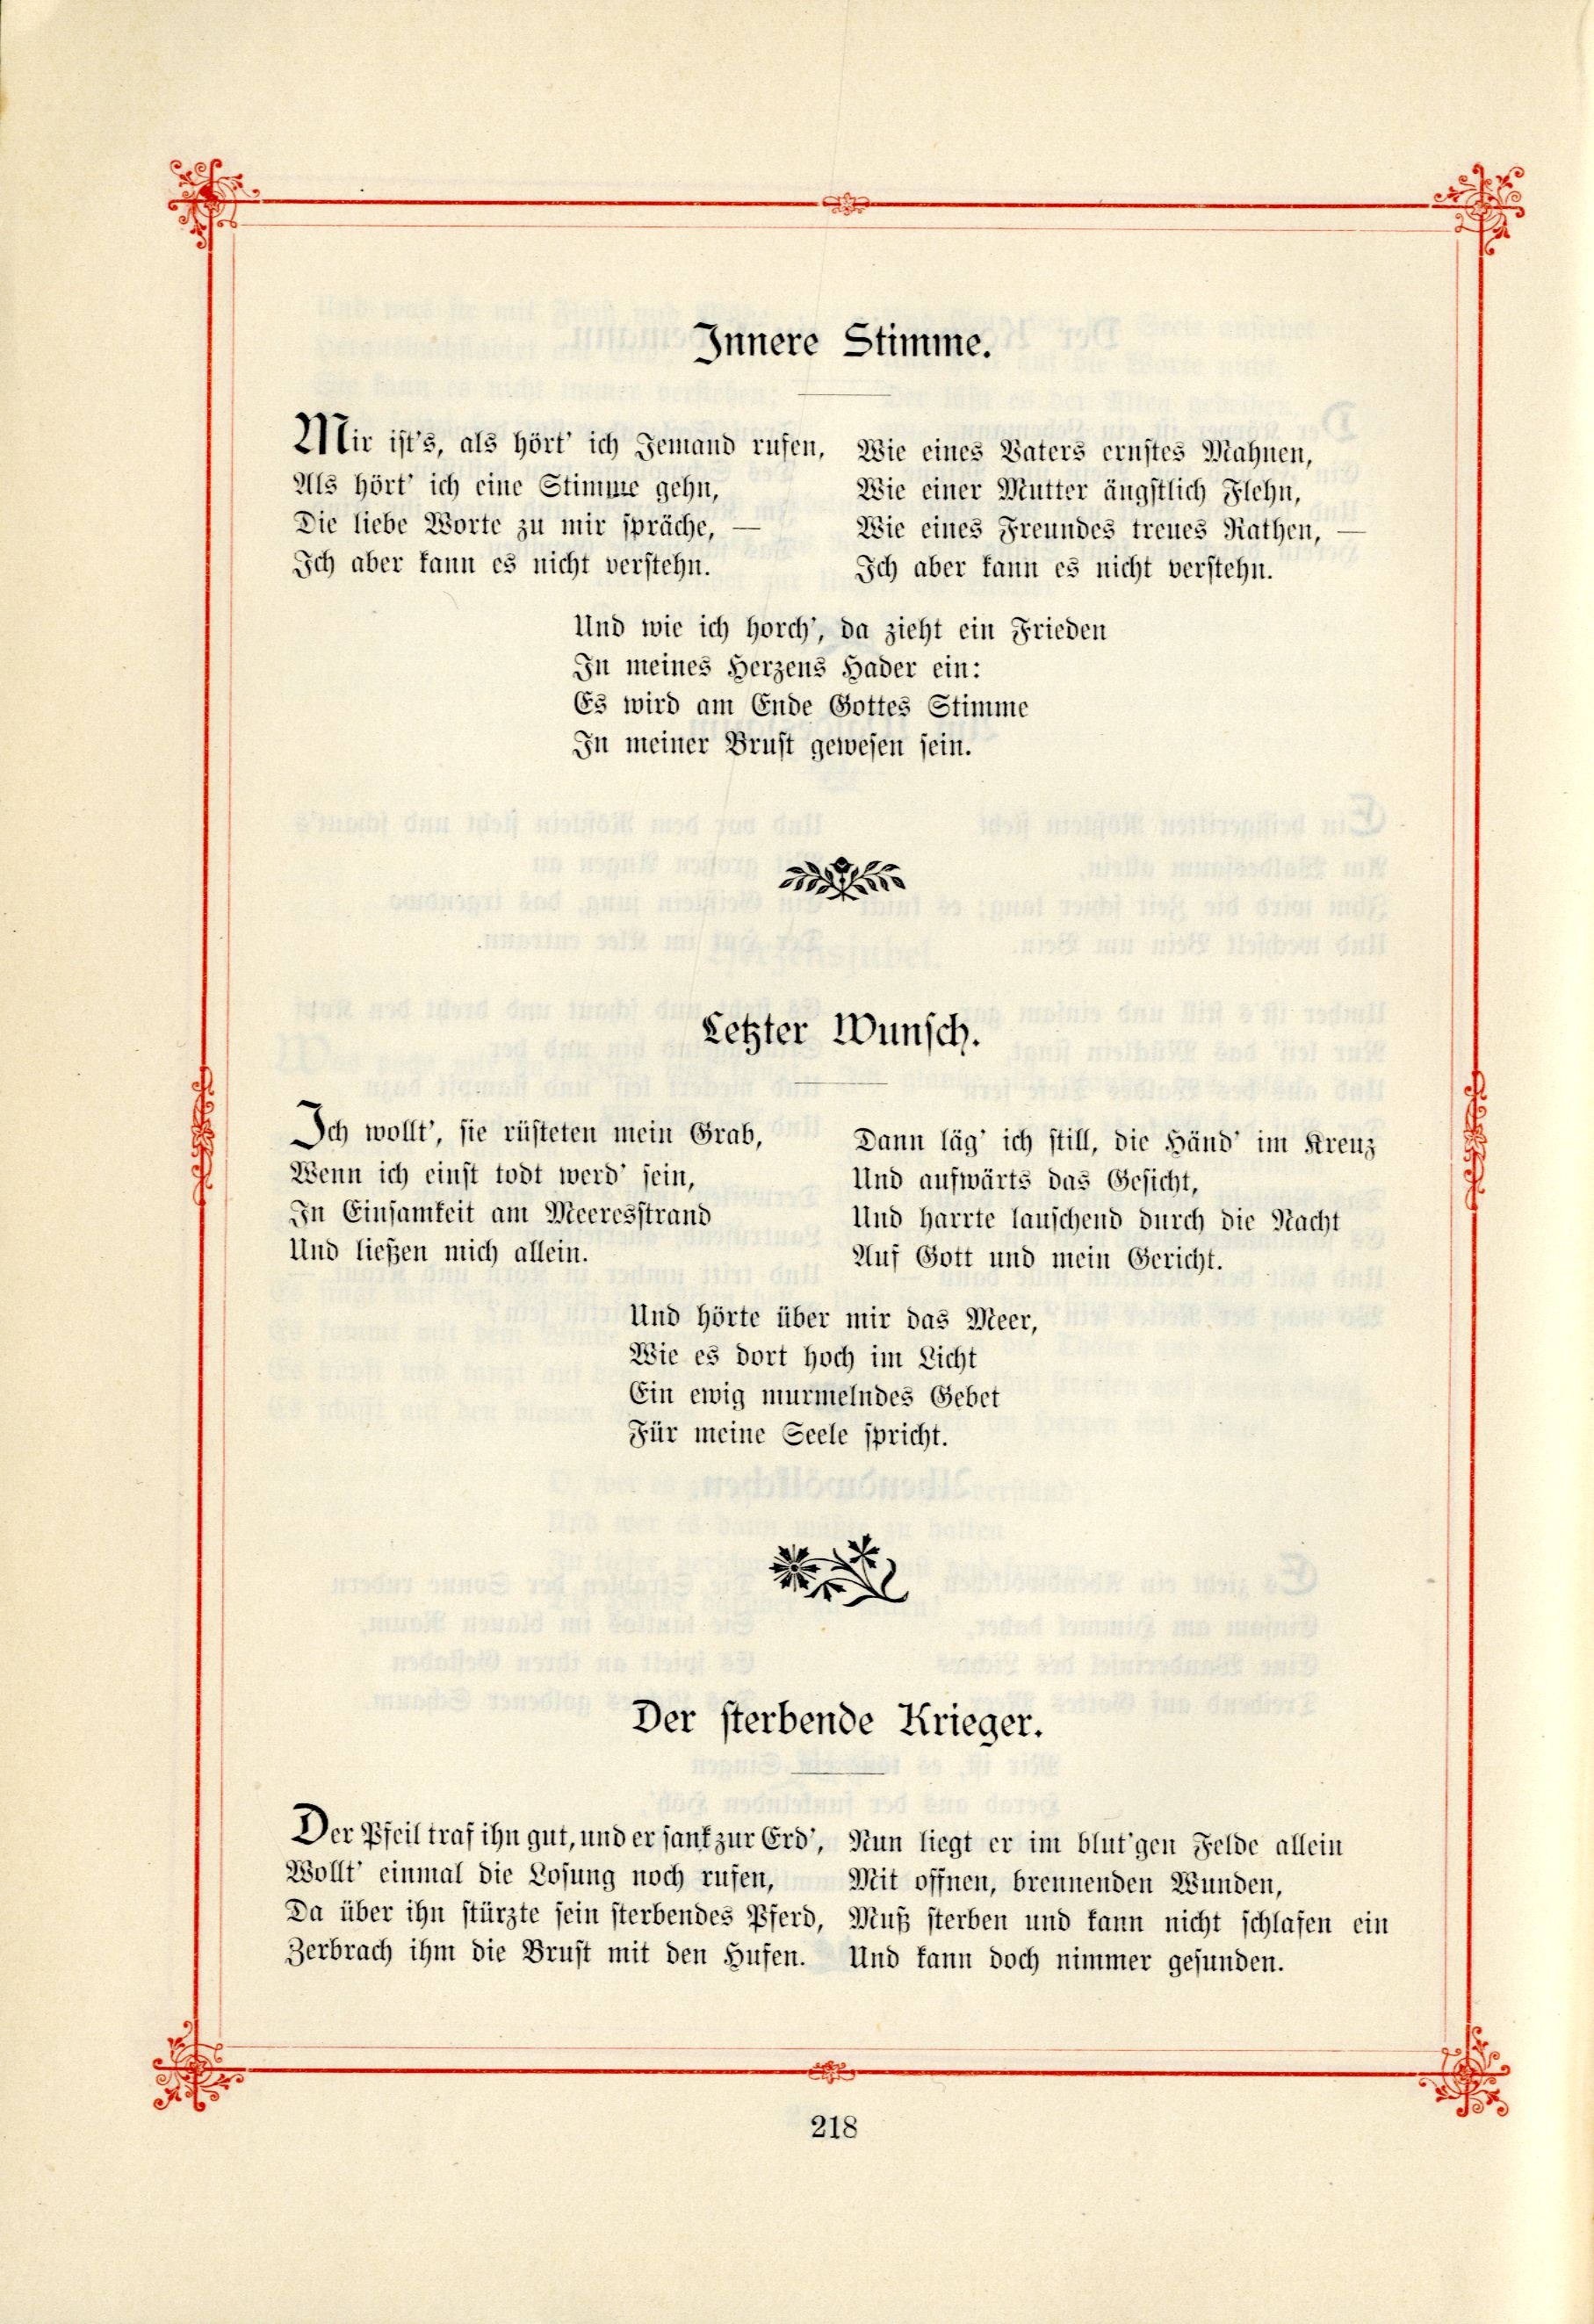 Das Baltische Dichterbuch (1895) | 264. (218) Основной текст